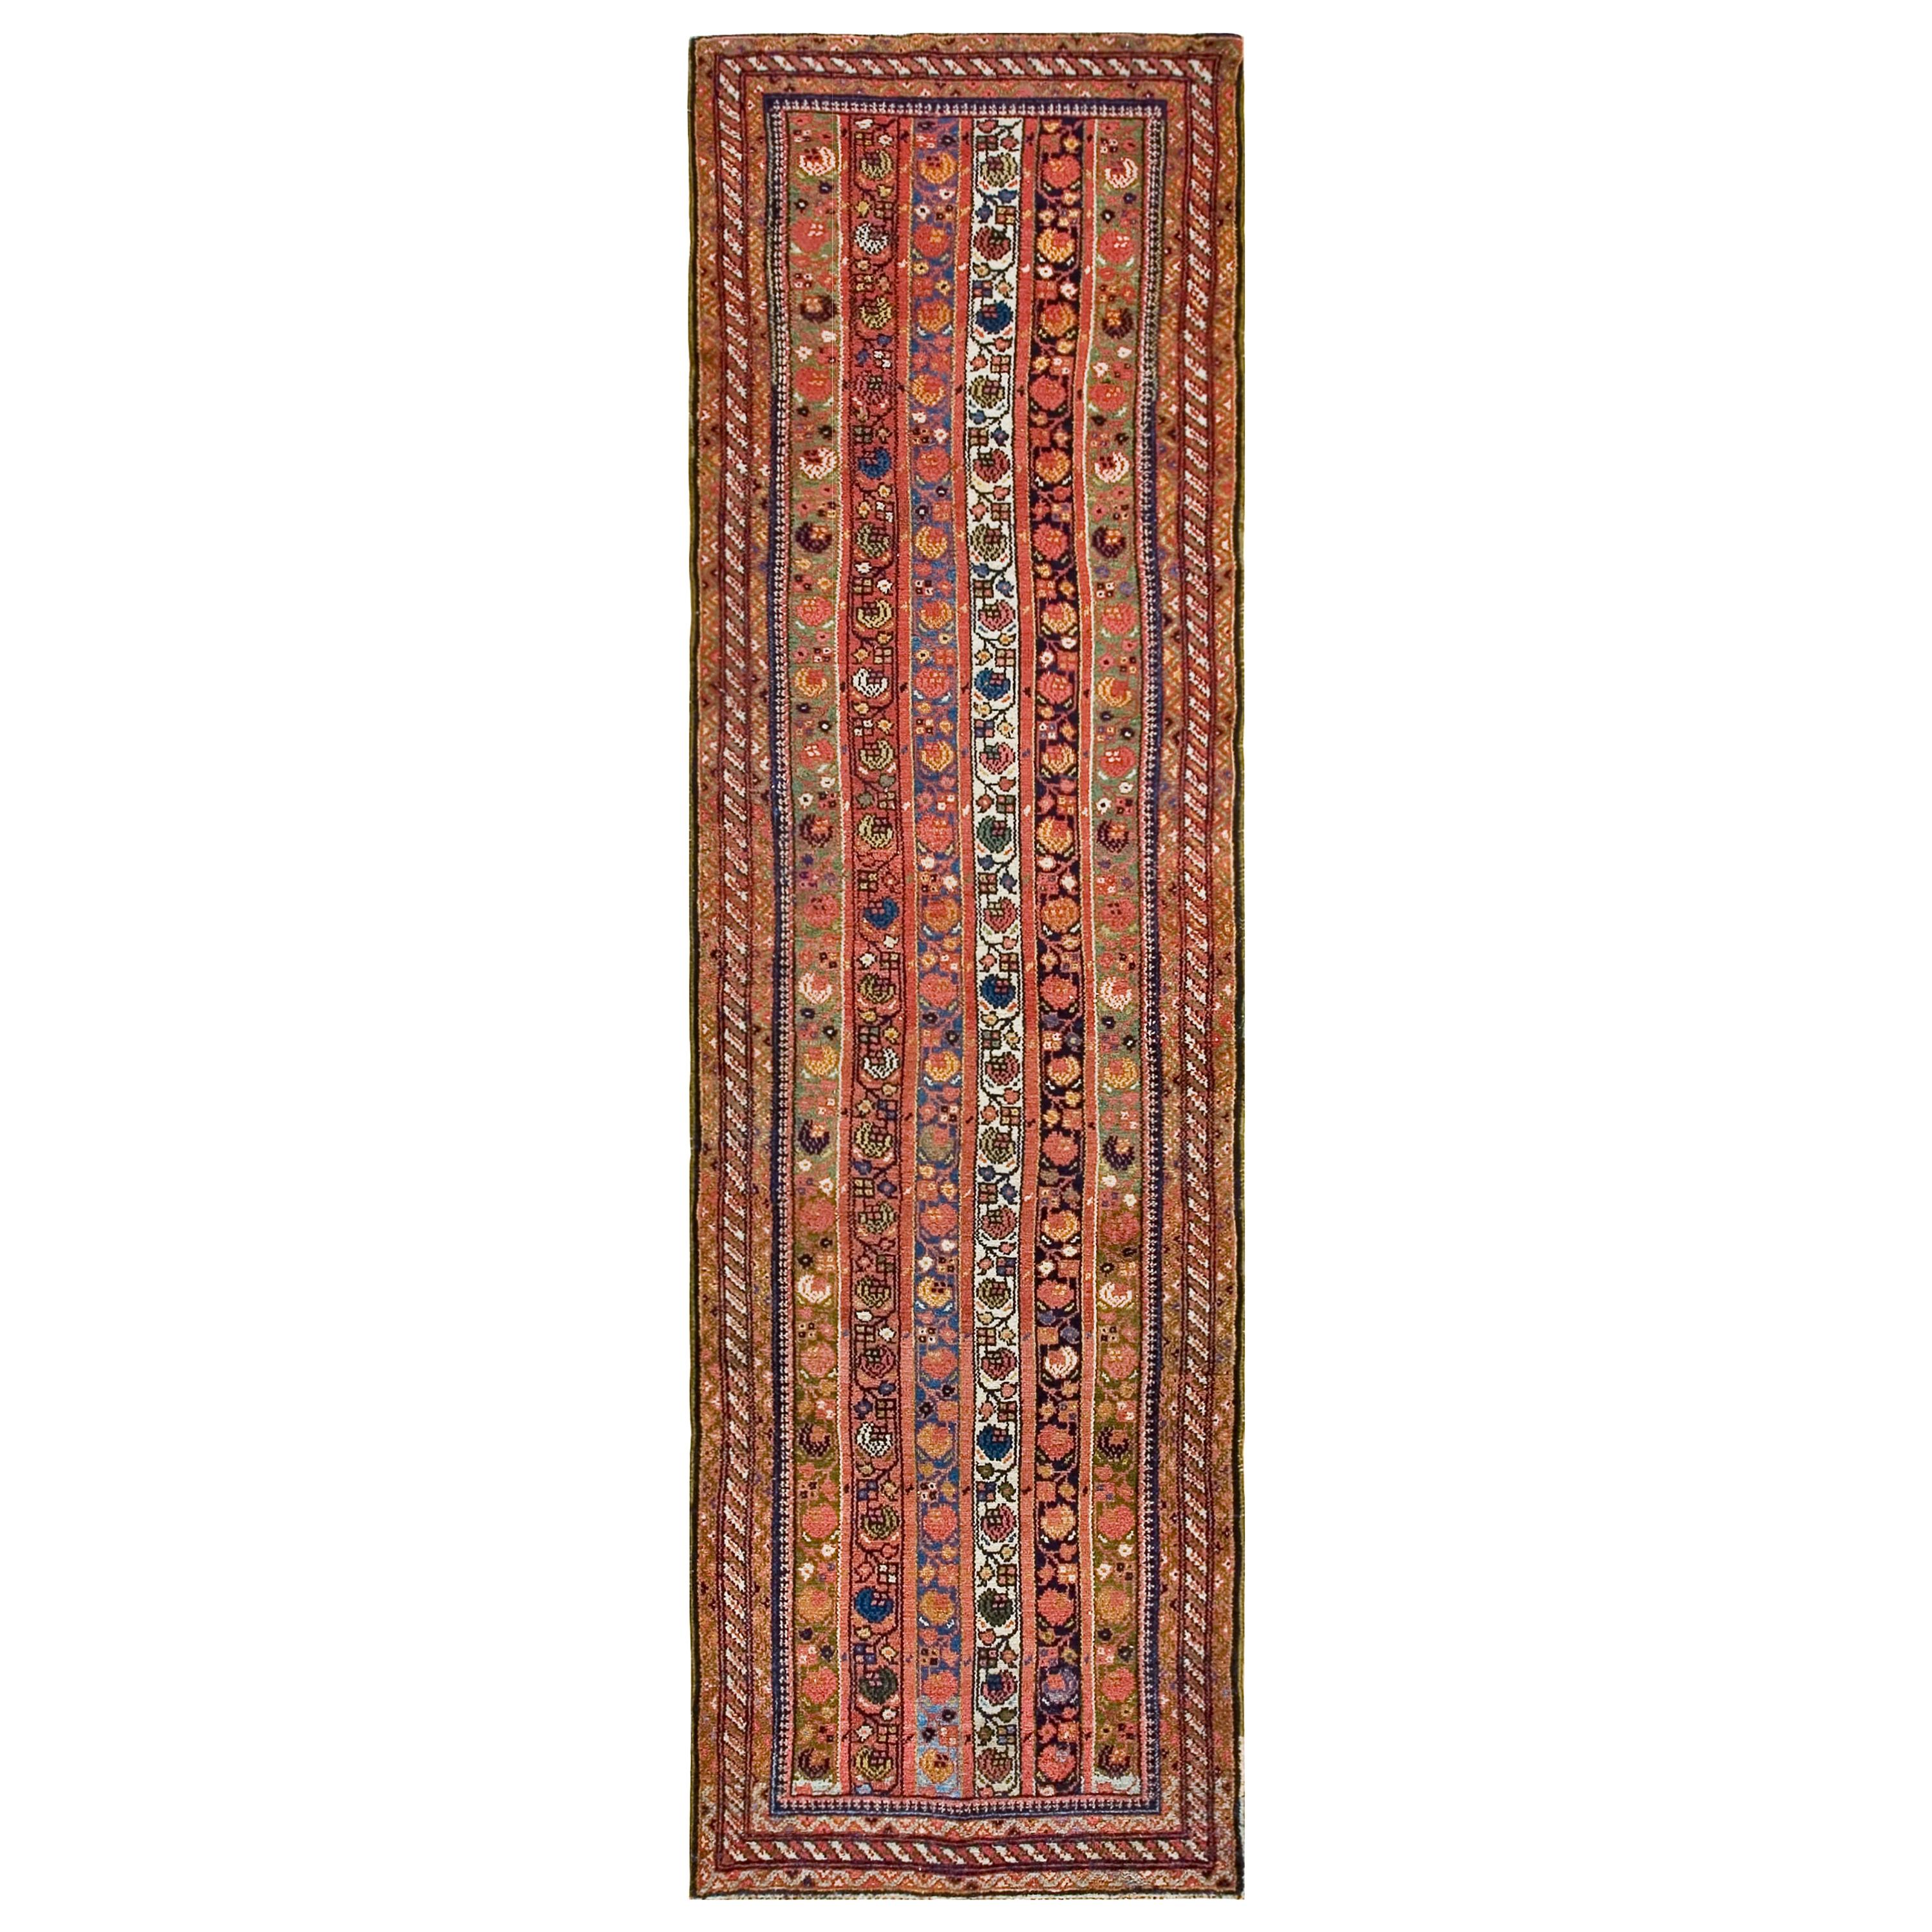 Early 20th Century W. Persian Kurdish Runner Carpet ( 3'5" x 11'8" - 104 x 356 ) For Sale